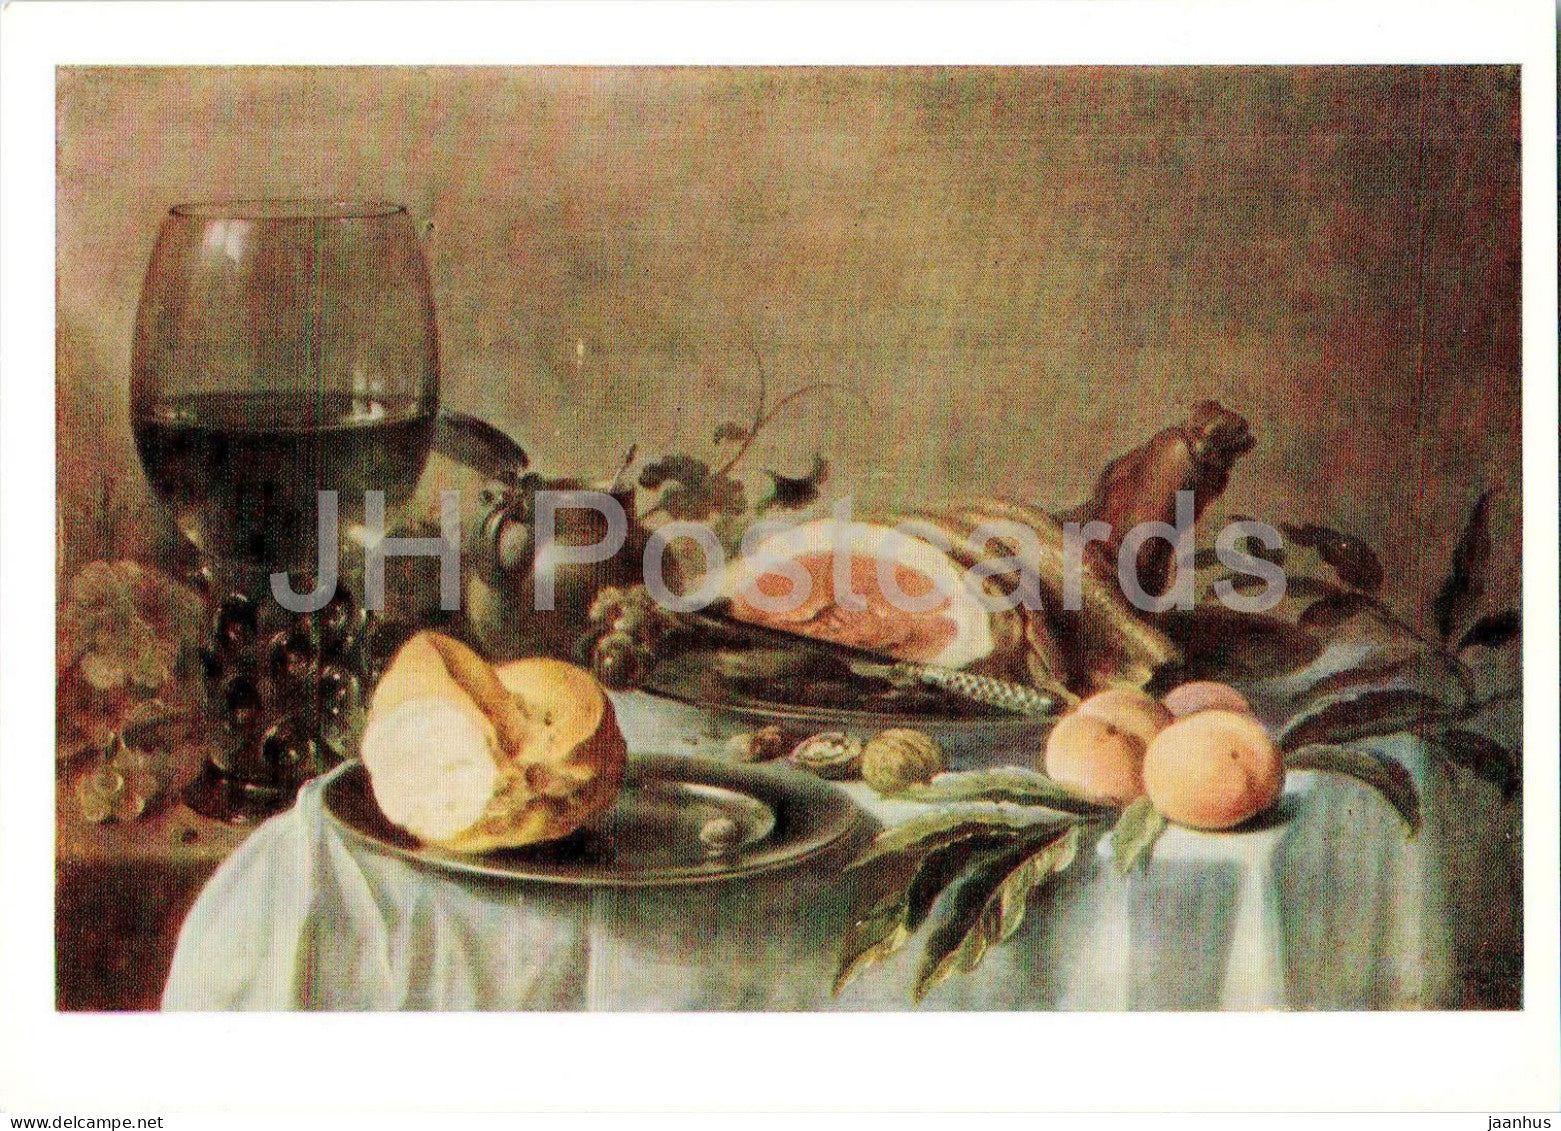 painting by Pieter Claesz - Breakfast with ham - peach - Dutch art - 1972 - Russia USSR - unused - JH Postcards